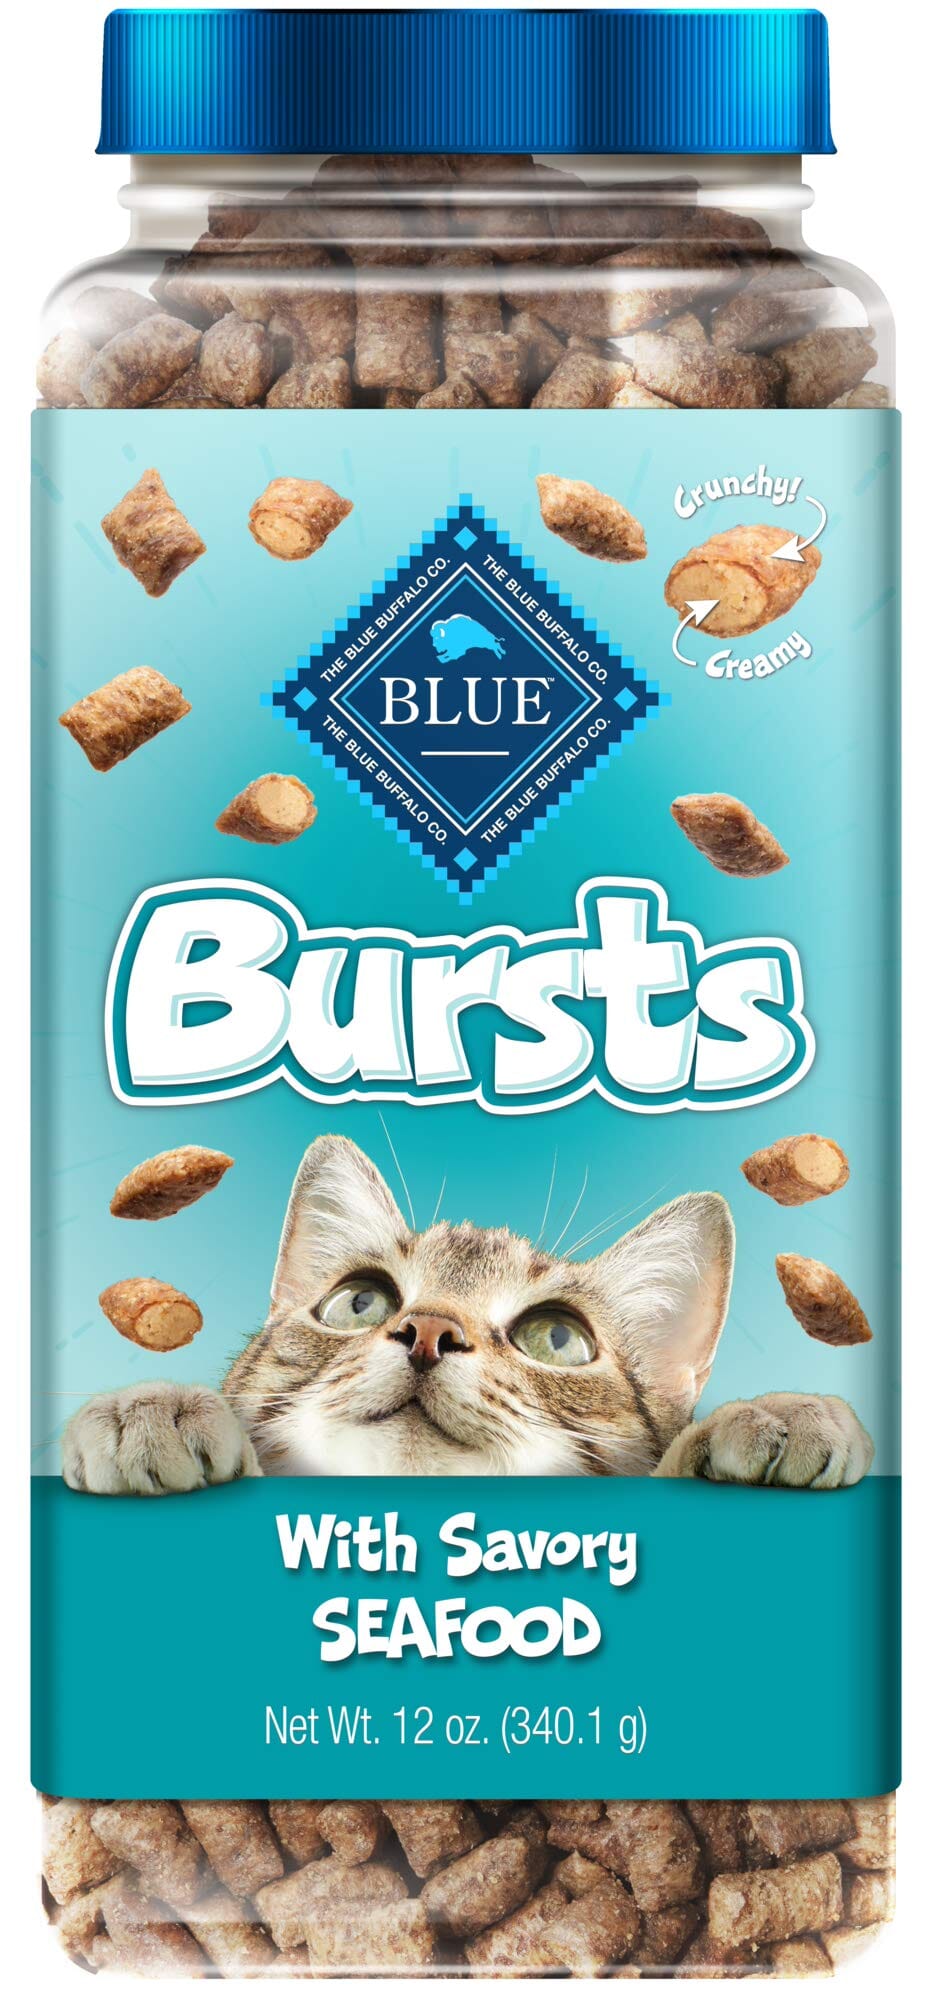 Blue Buffalo Bursts Crunchy and Creamy Seafood Crunchy Cat Treats- 12 Oz  